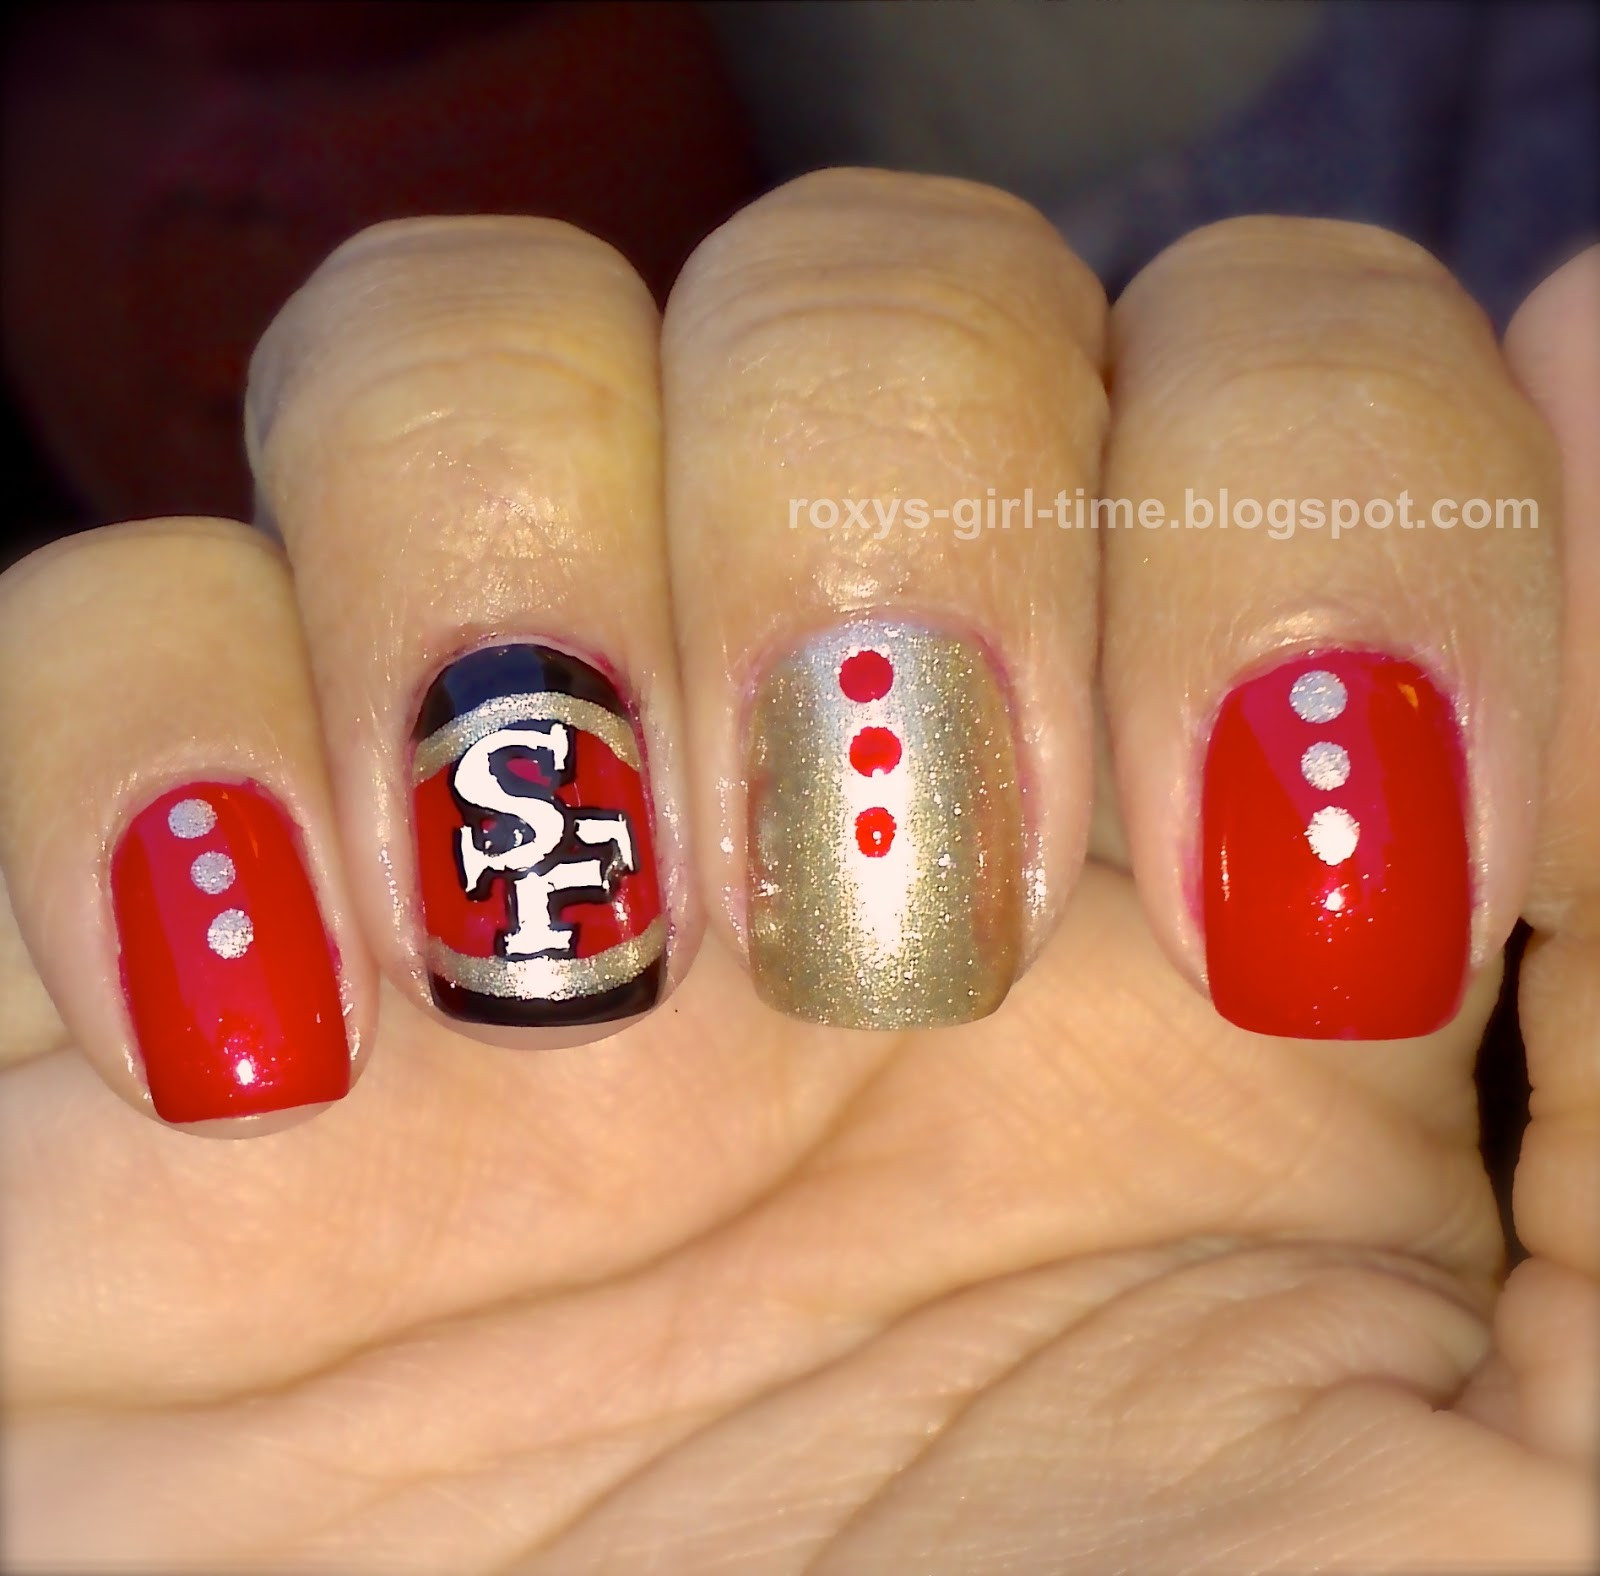 49er Nail Designs
 Roxy s Girl Time NOTD SF 49ers Nail Art